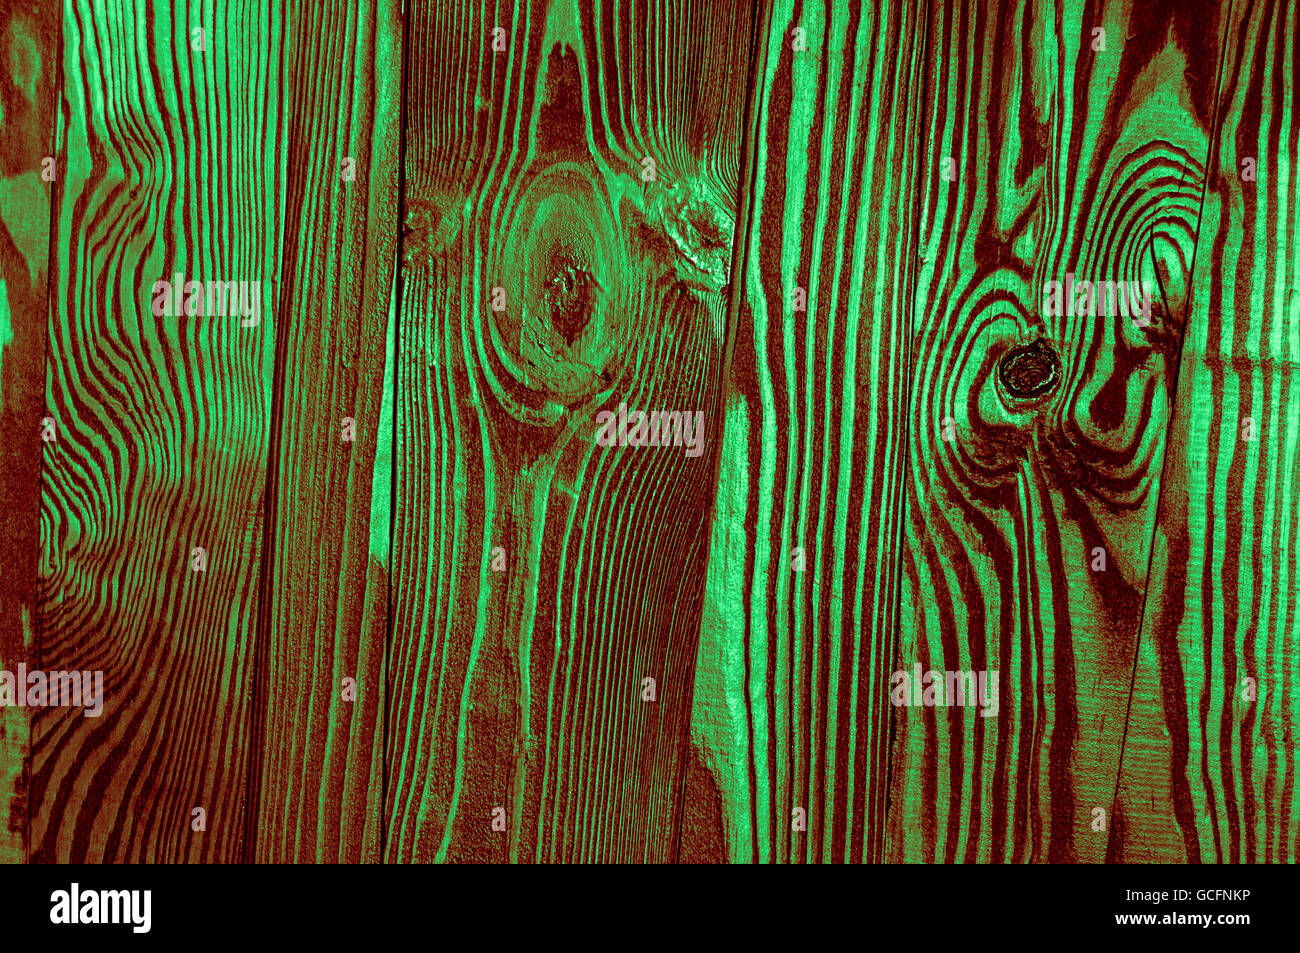 Perfect light dark green reddish greenish irregular old dark bright wood timber surface texture background Stock Photo